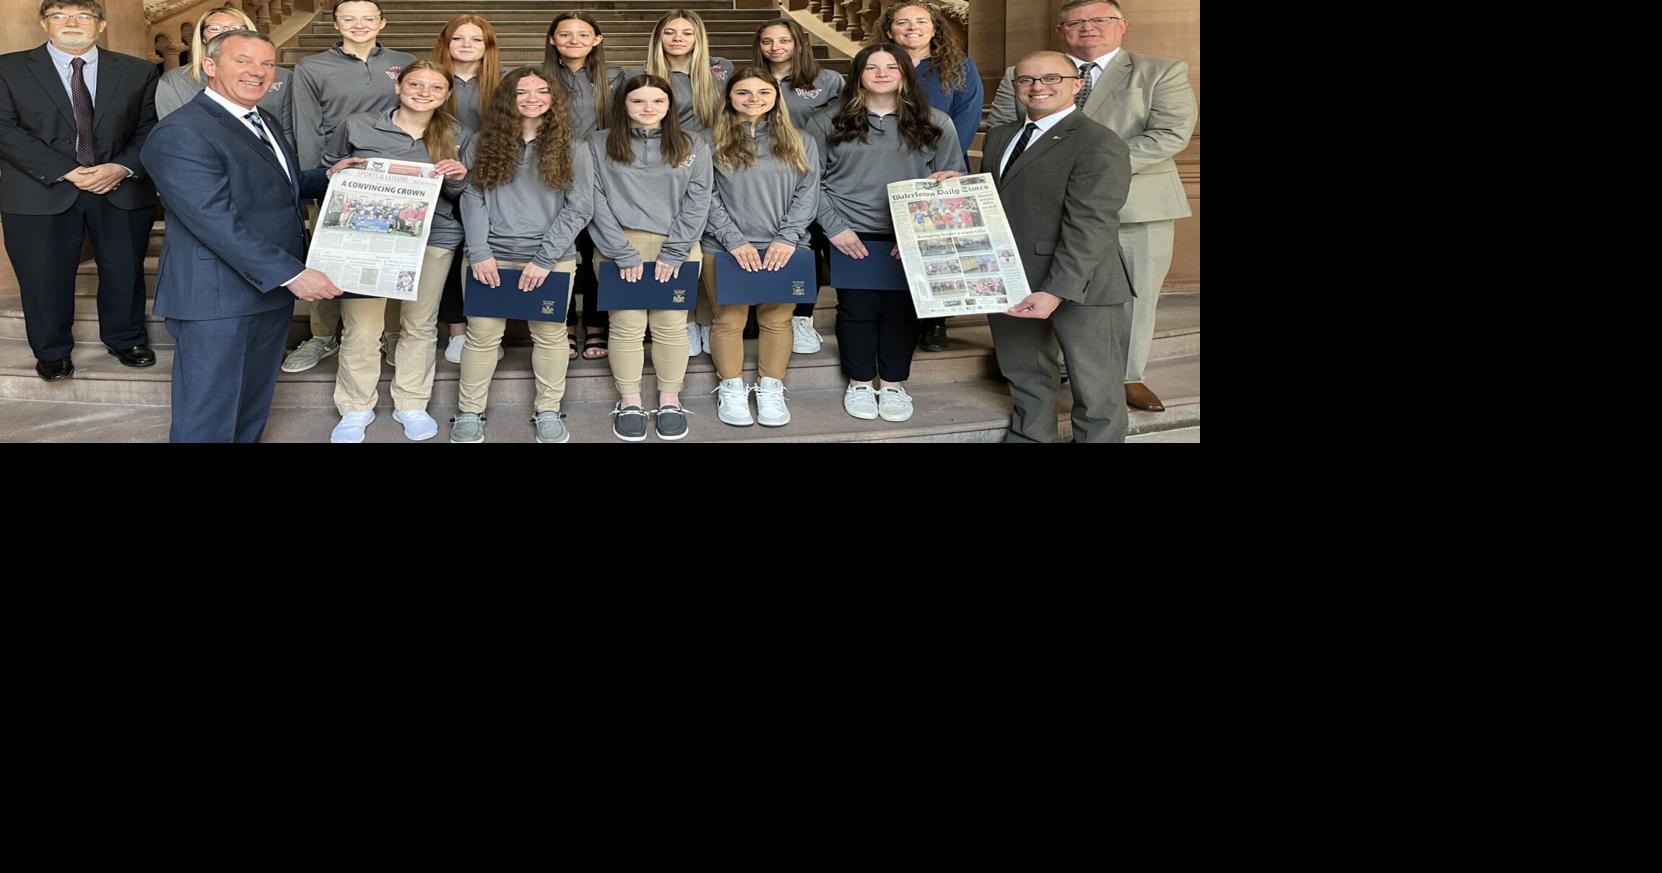 Hammond Central girls varsity basketball team visits Albany after championship win | Education